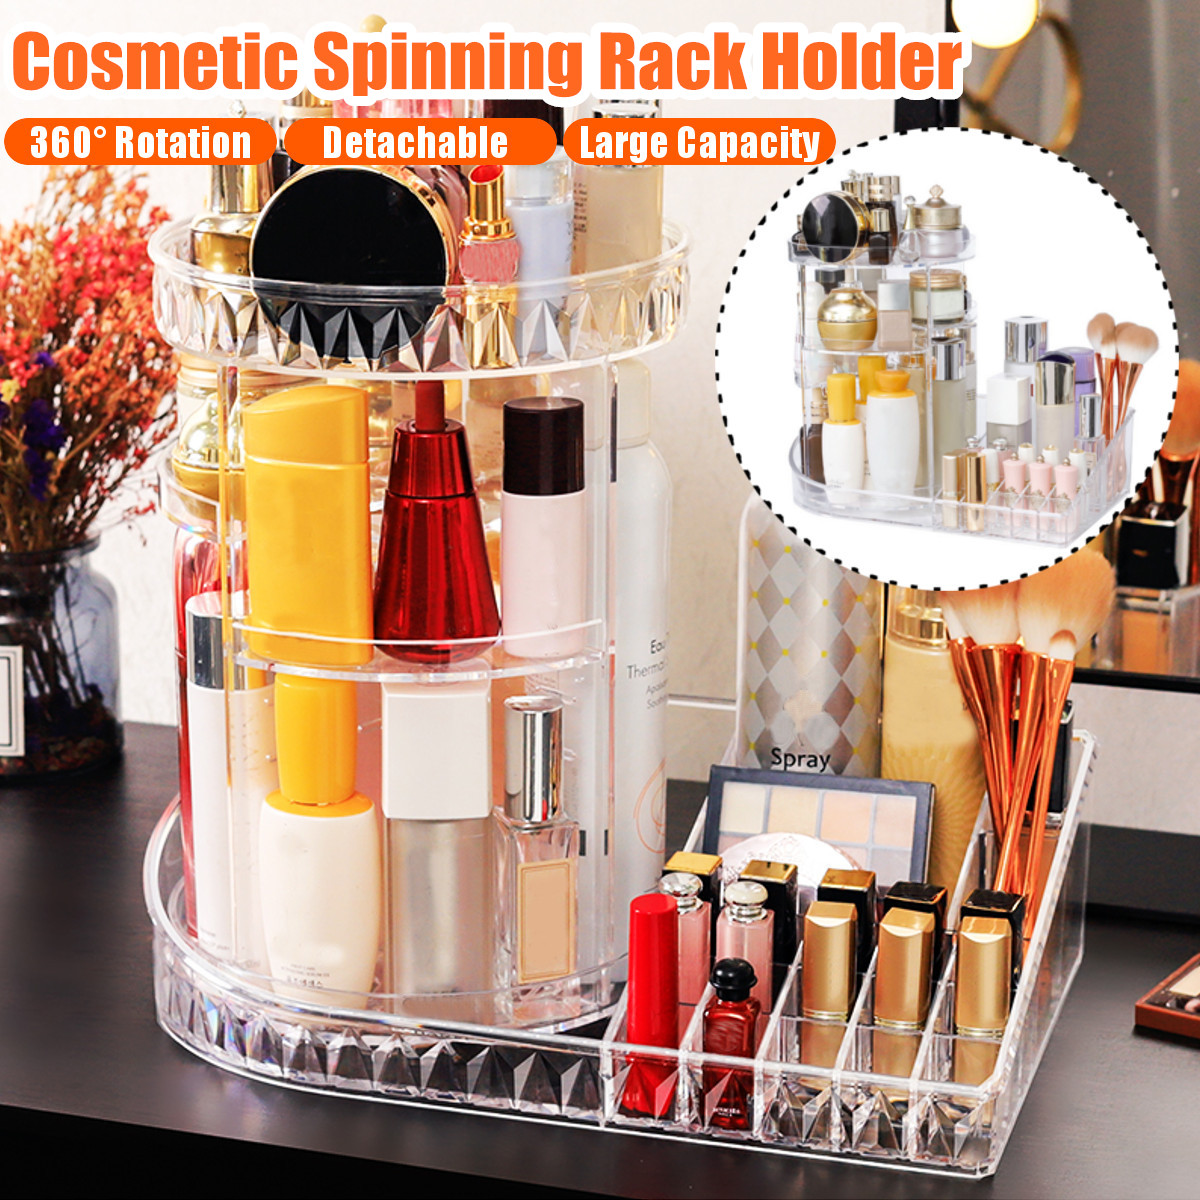 360-Degree-Rotation-Transparent-Tabletop-Acrylic-Cosmetic-Rotating-Makeup-Organizer-Spinning-Rack-La-1587282-7